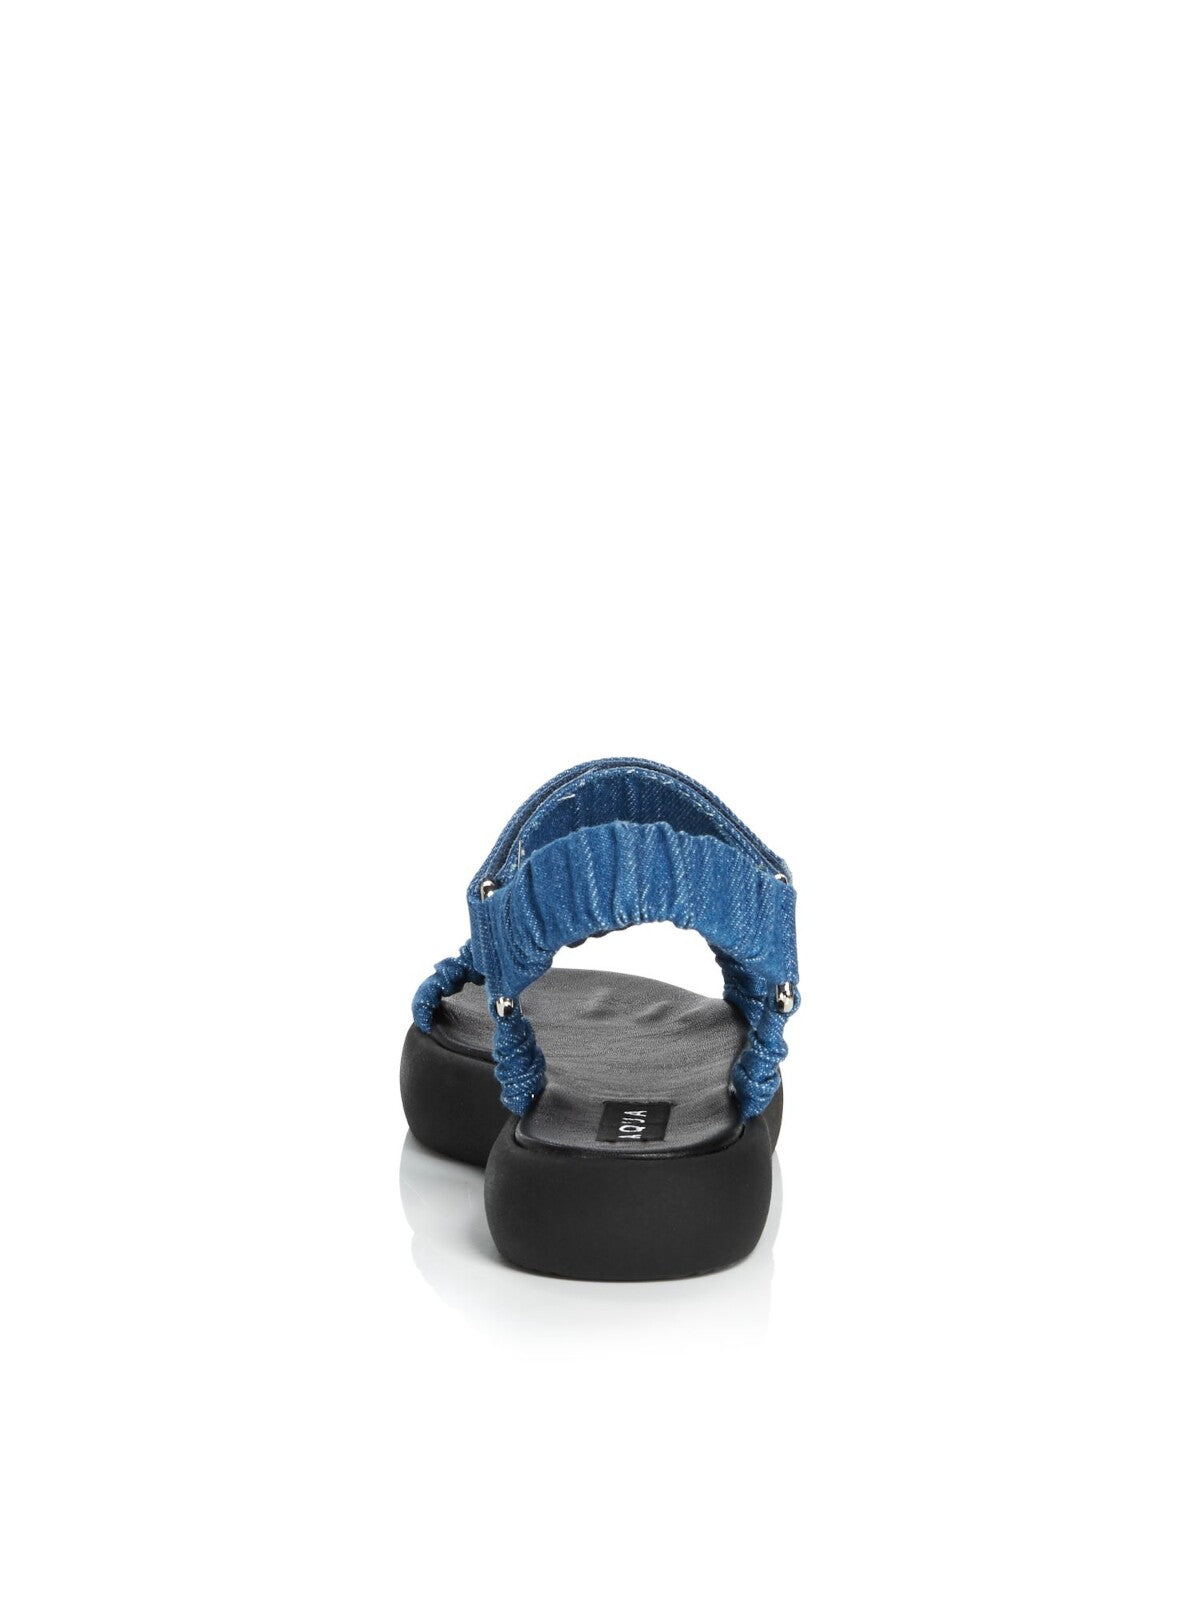 AQUA Womens Blue Adjustable Strap Cushioned Tenly Square Toe Platform Slingback Sandal 6.5 M